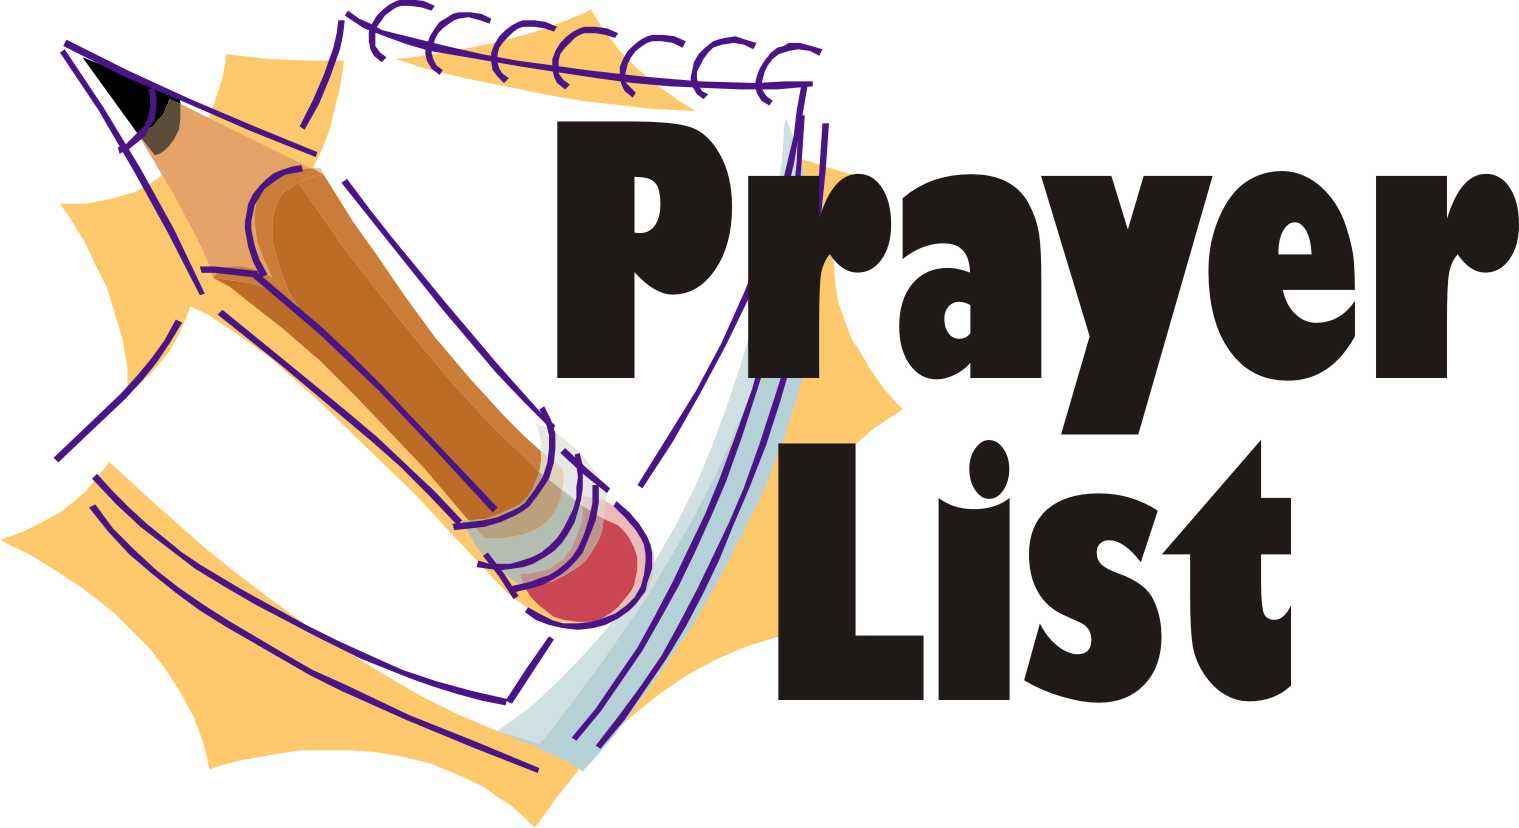 pray clipart prayer leader